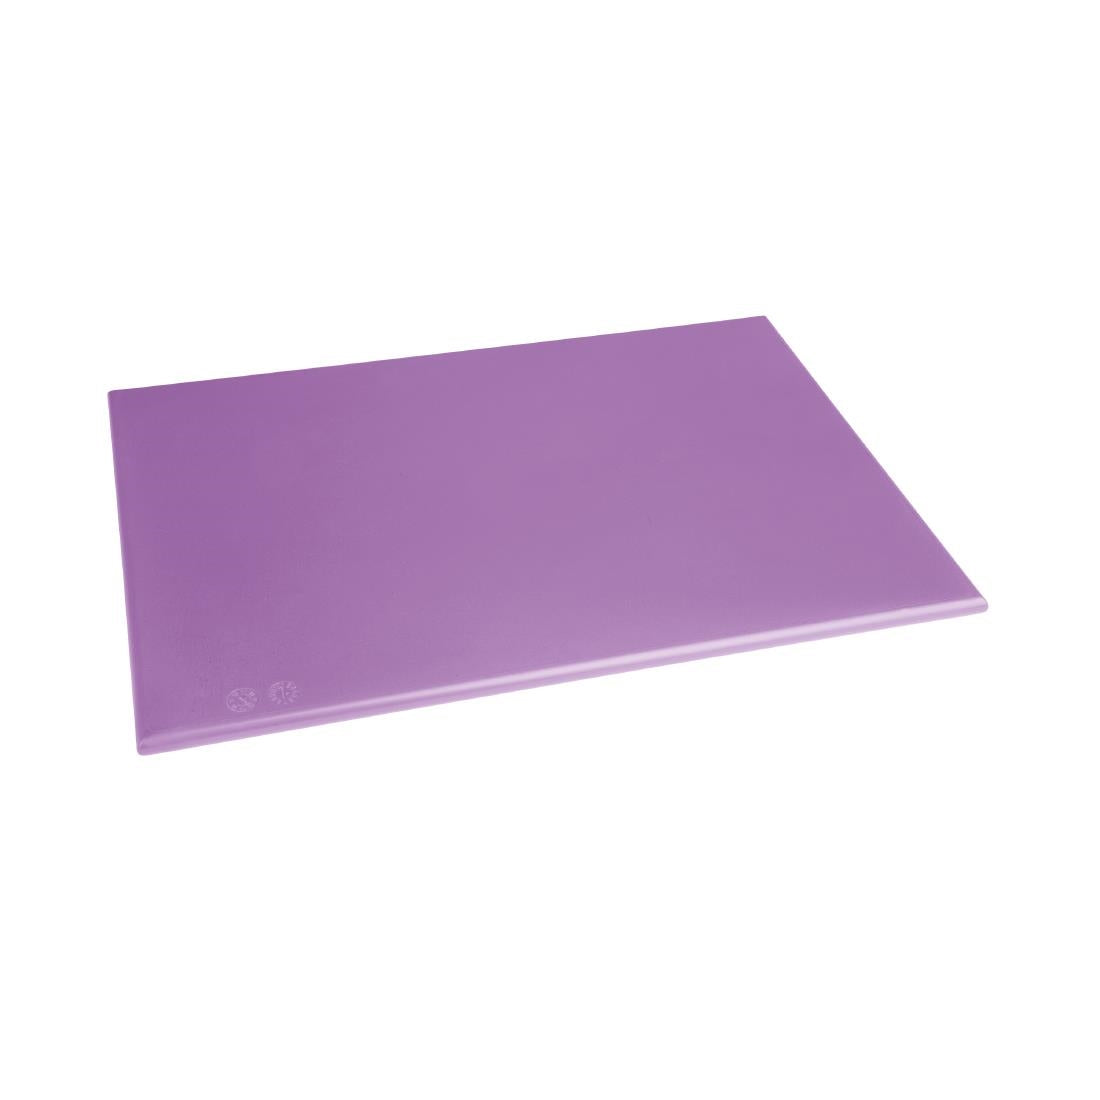 FX105 Hygiplas Anti-bacterial High Density Chopping Board Purple - 450x300x10mm JD Catering Equipment Solutions Ltd